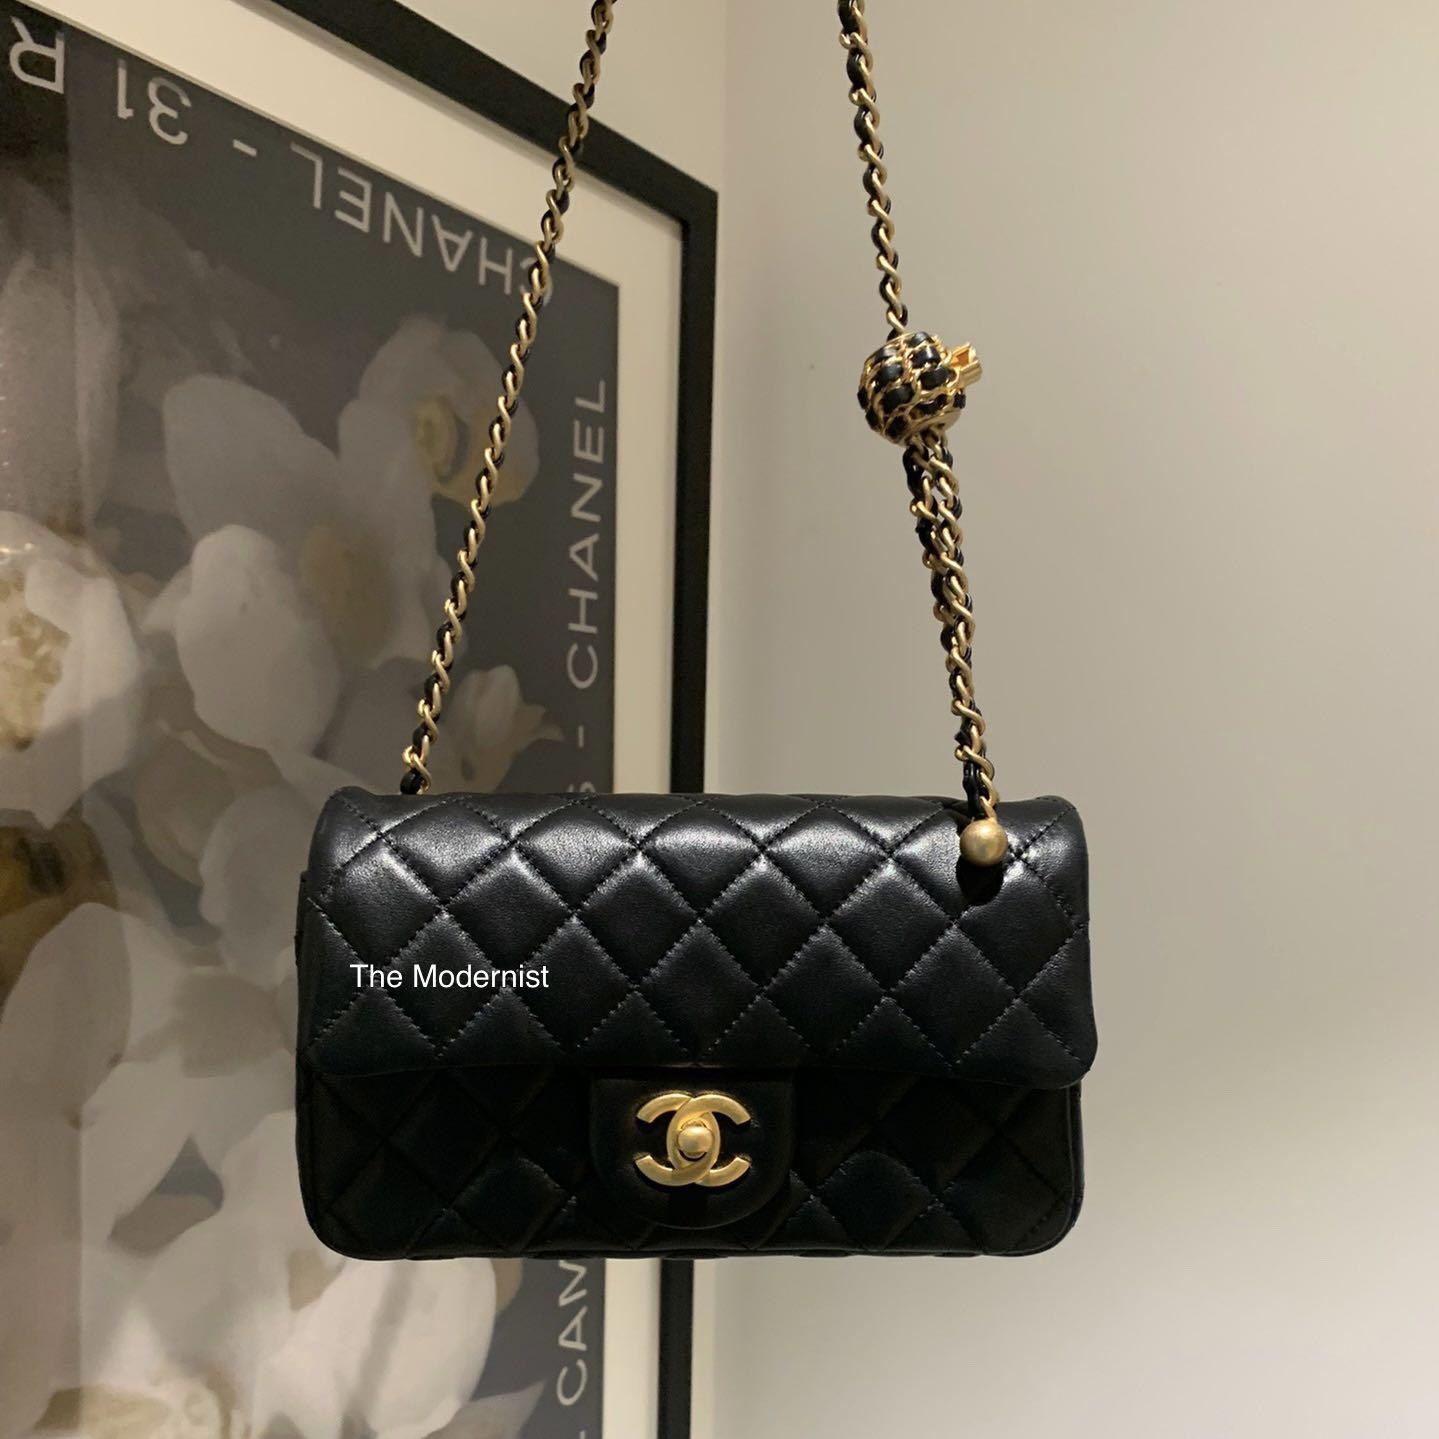 Chanel 22 Mini Handbag with Pearls Comparison + Mod Shots